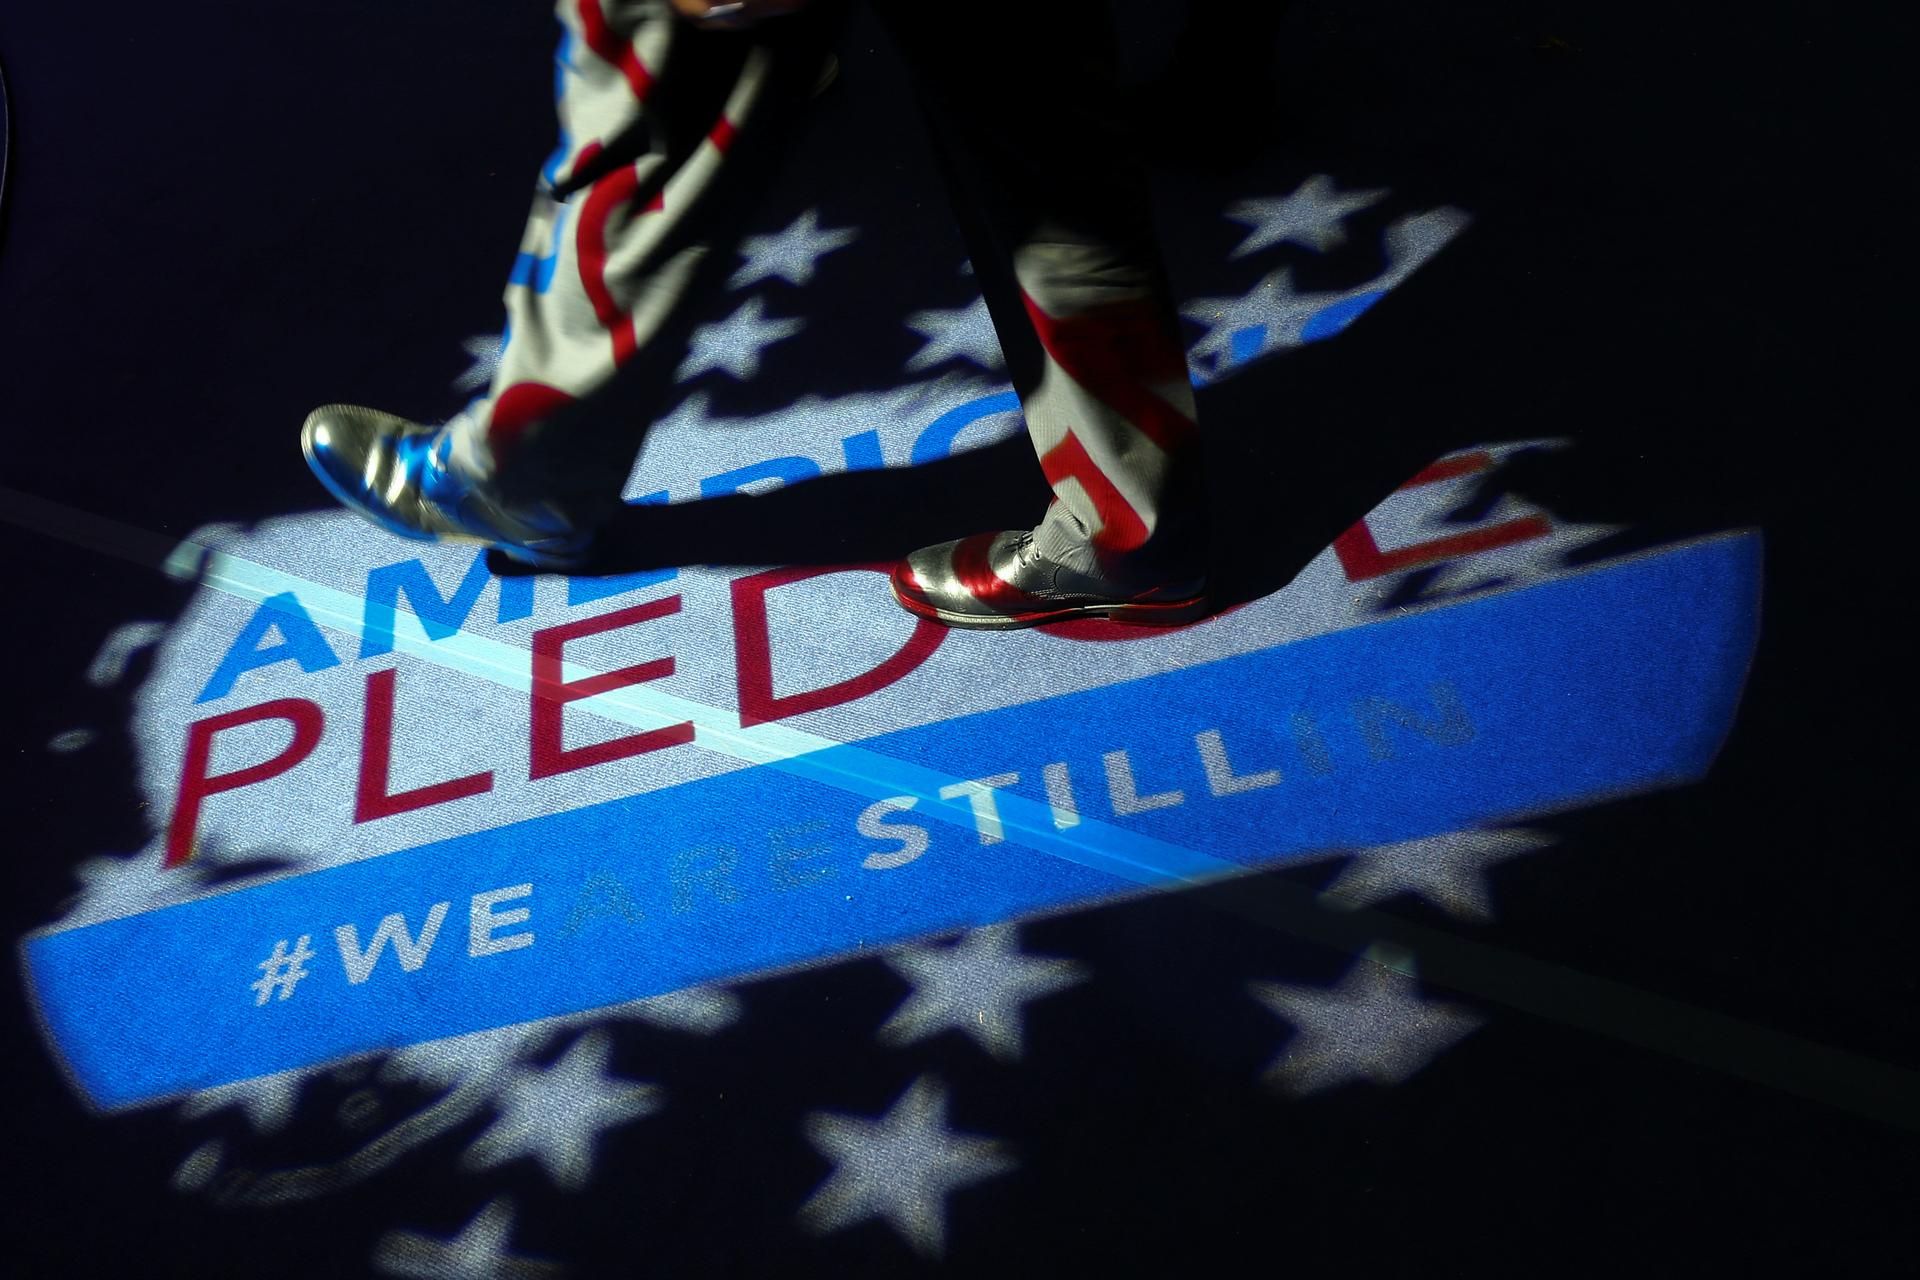 A man walks over a projection on the floor reading "America's pledge #wearestillin"